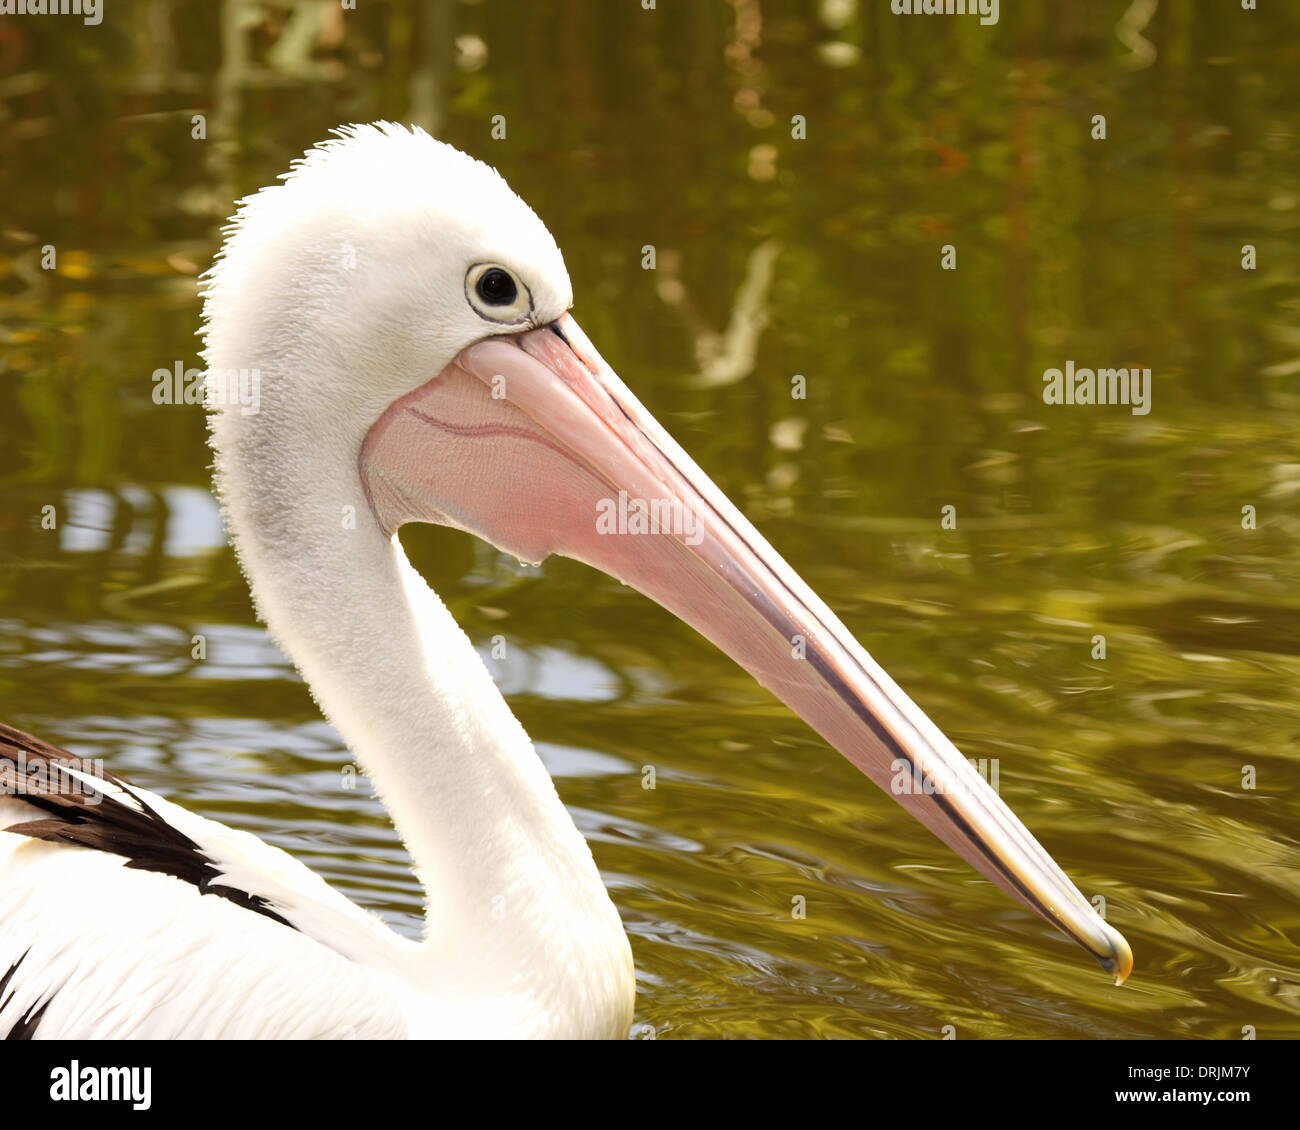 A portrait of an Australian Pelican and its large beak. Stock Photo